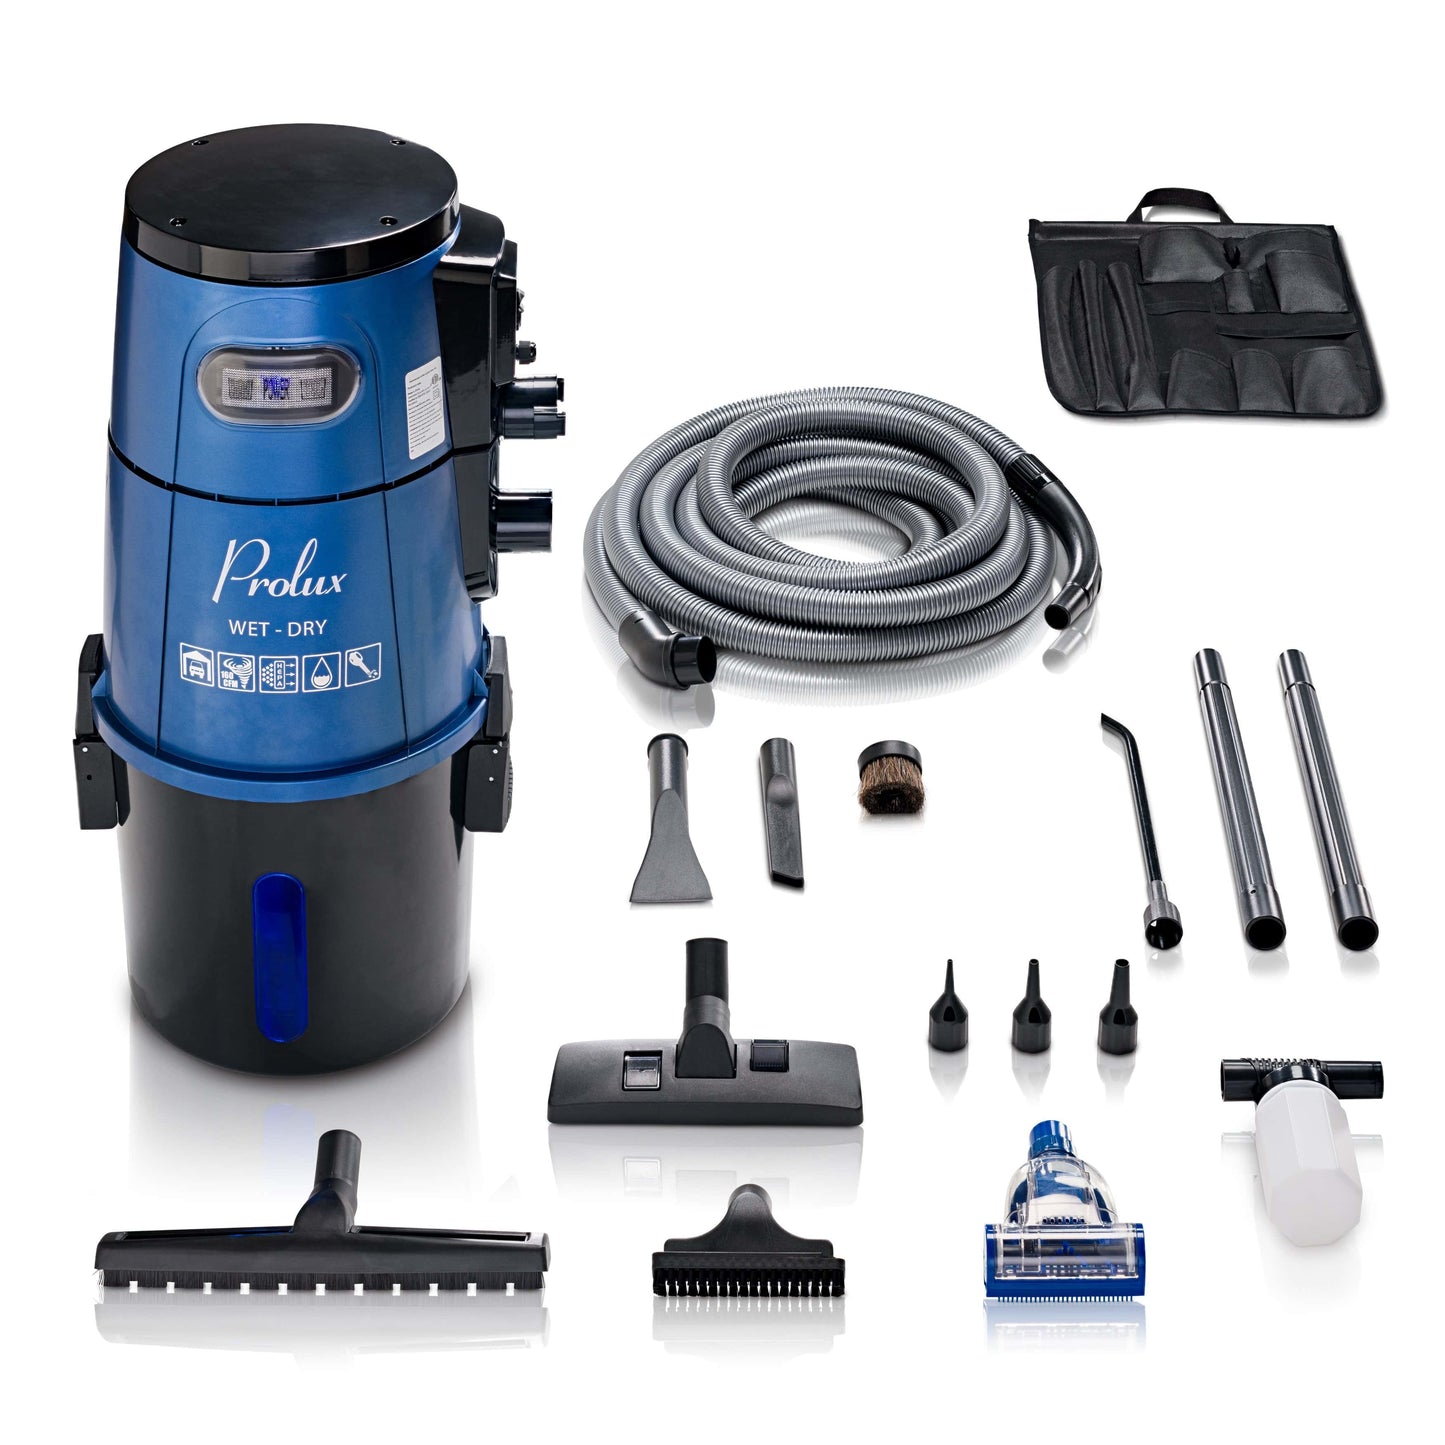 Blue Prolux Wet/Dry Garage Vacuum, Shampooer, Blower and Detailer